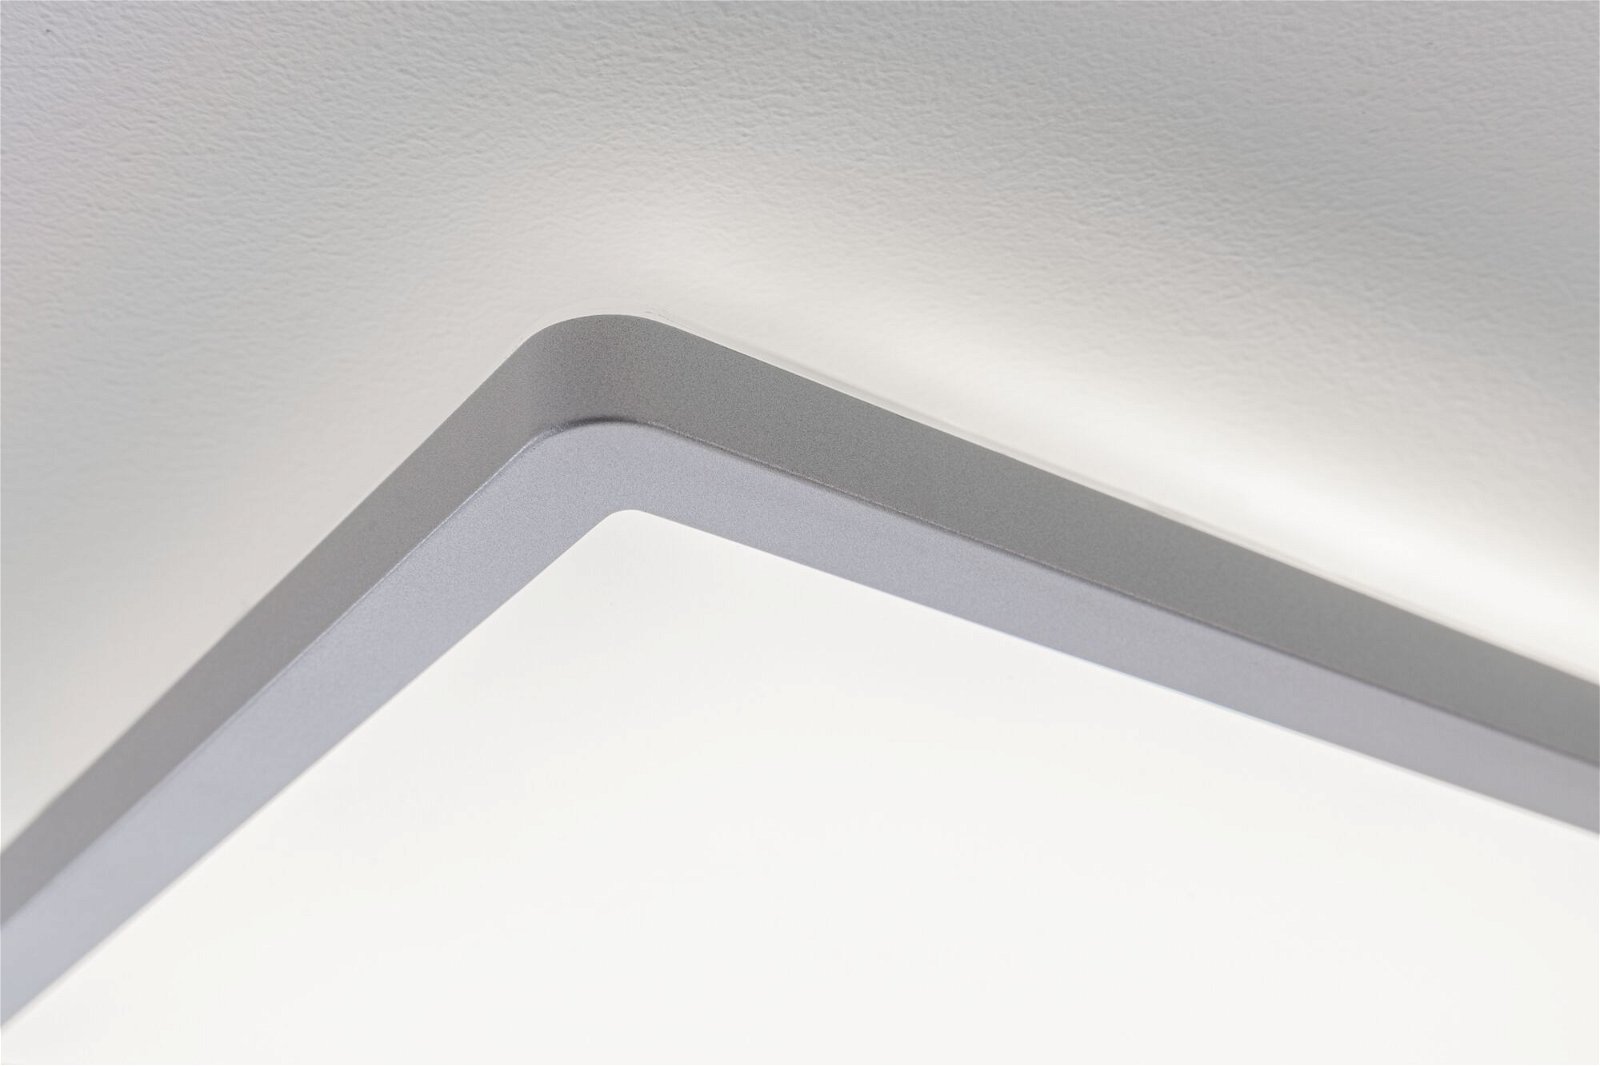 LED Panel Atria Shine Backlight eckig 190x190mm 11,2W 900lm 4000K Chrom matt